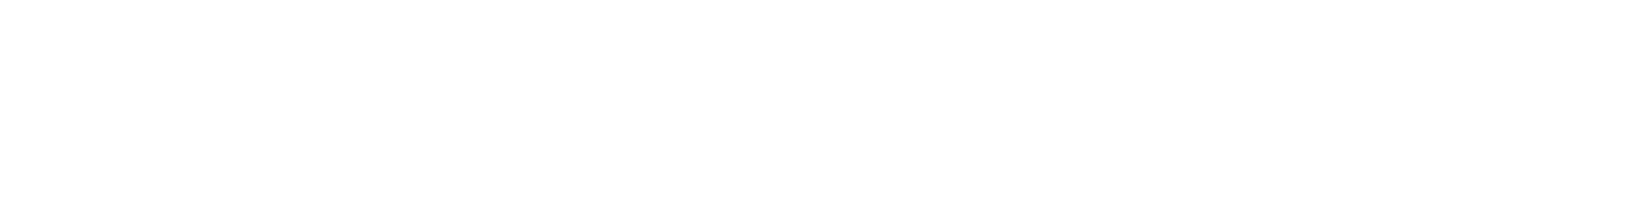 The Platta Law Firm White Logo